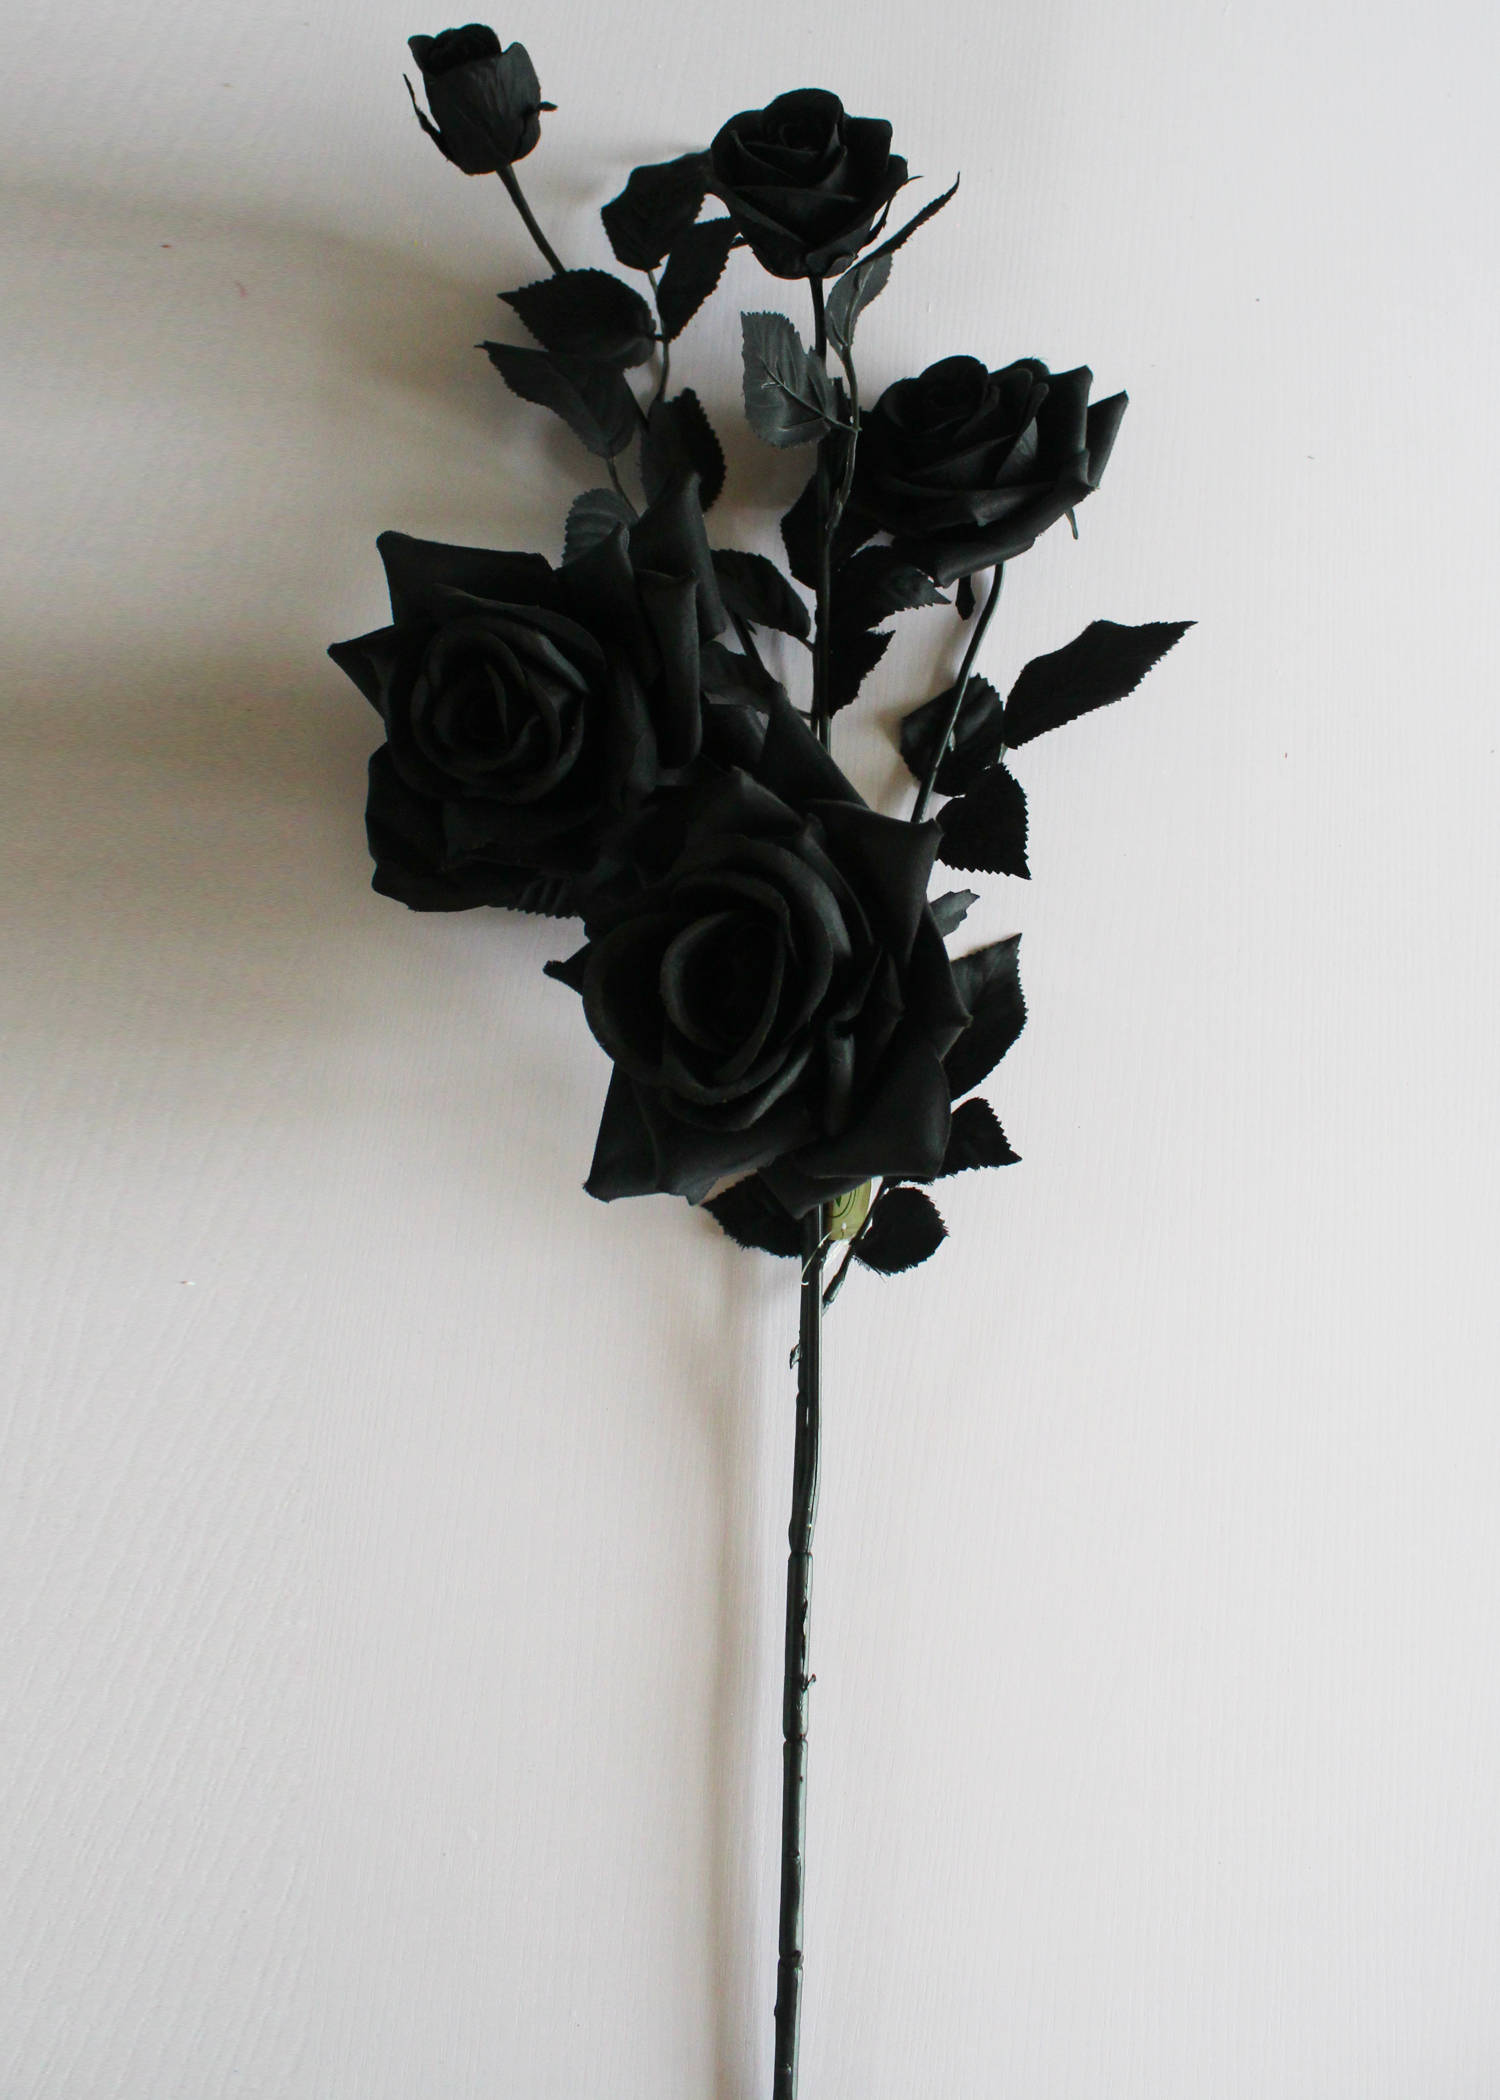 Caption: Mystic Beauty: Black Rose Iphone Wallpaper Wallpaper